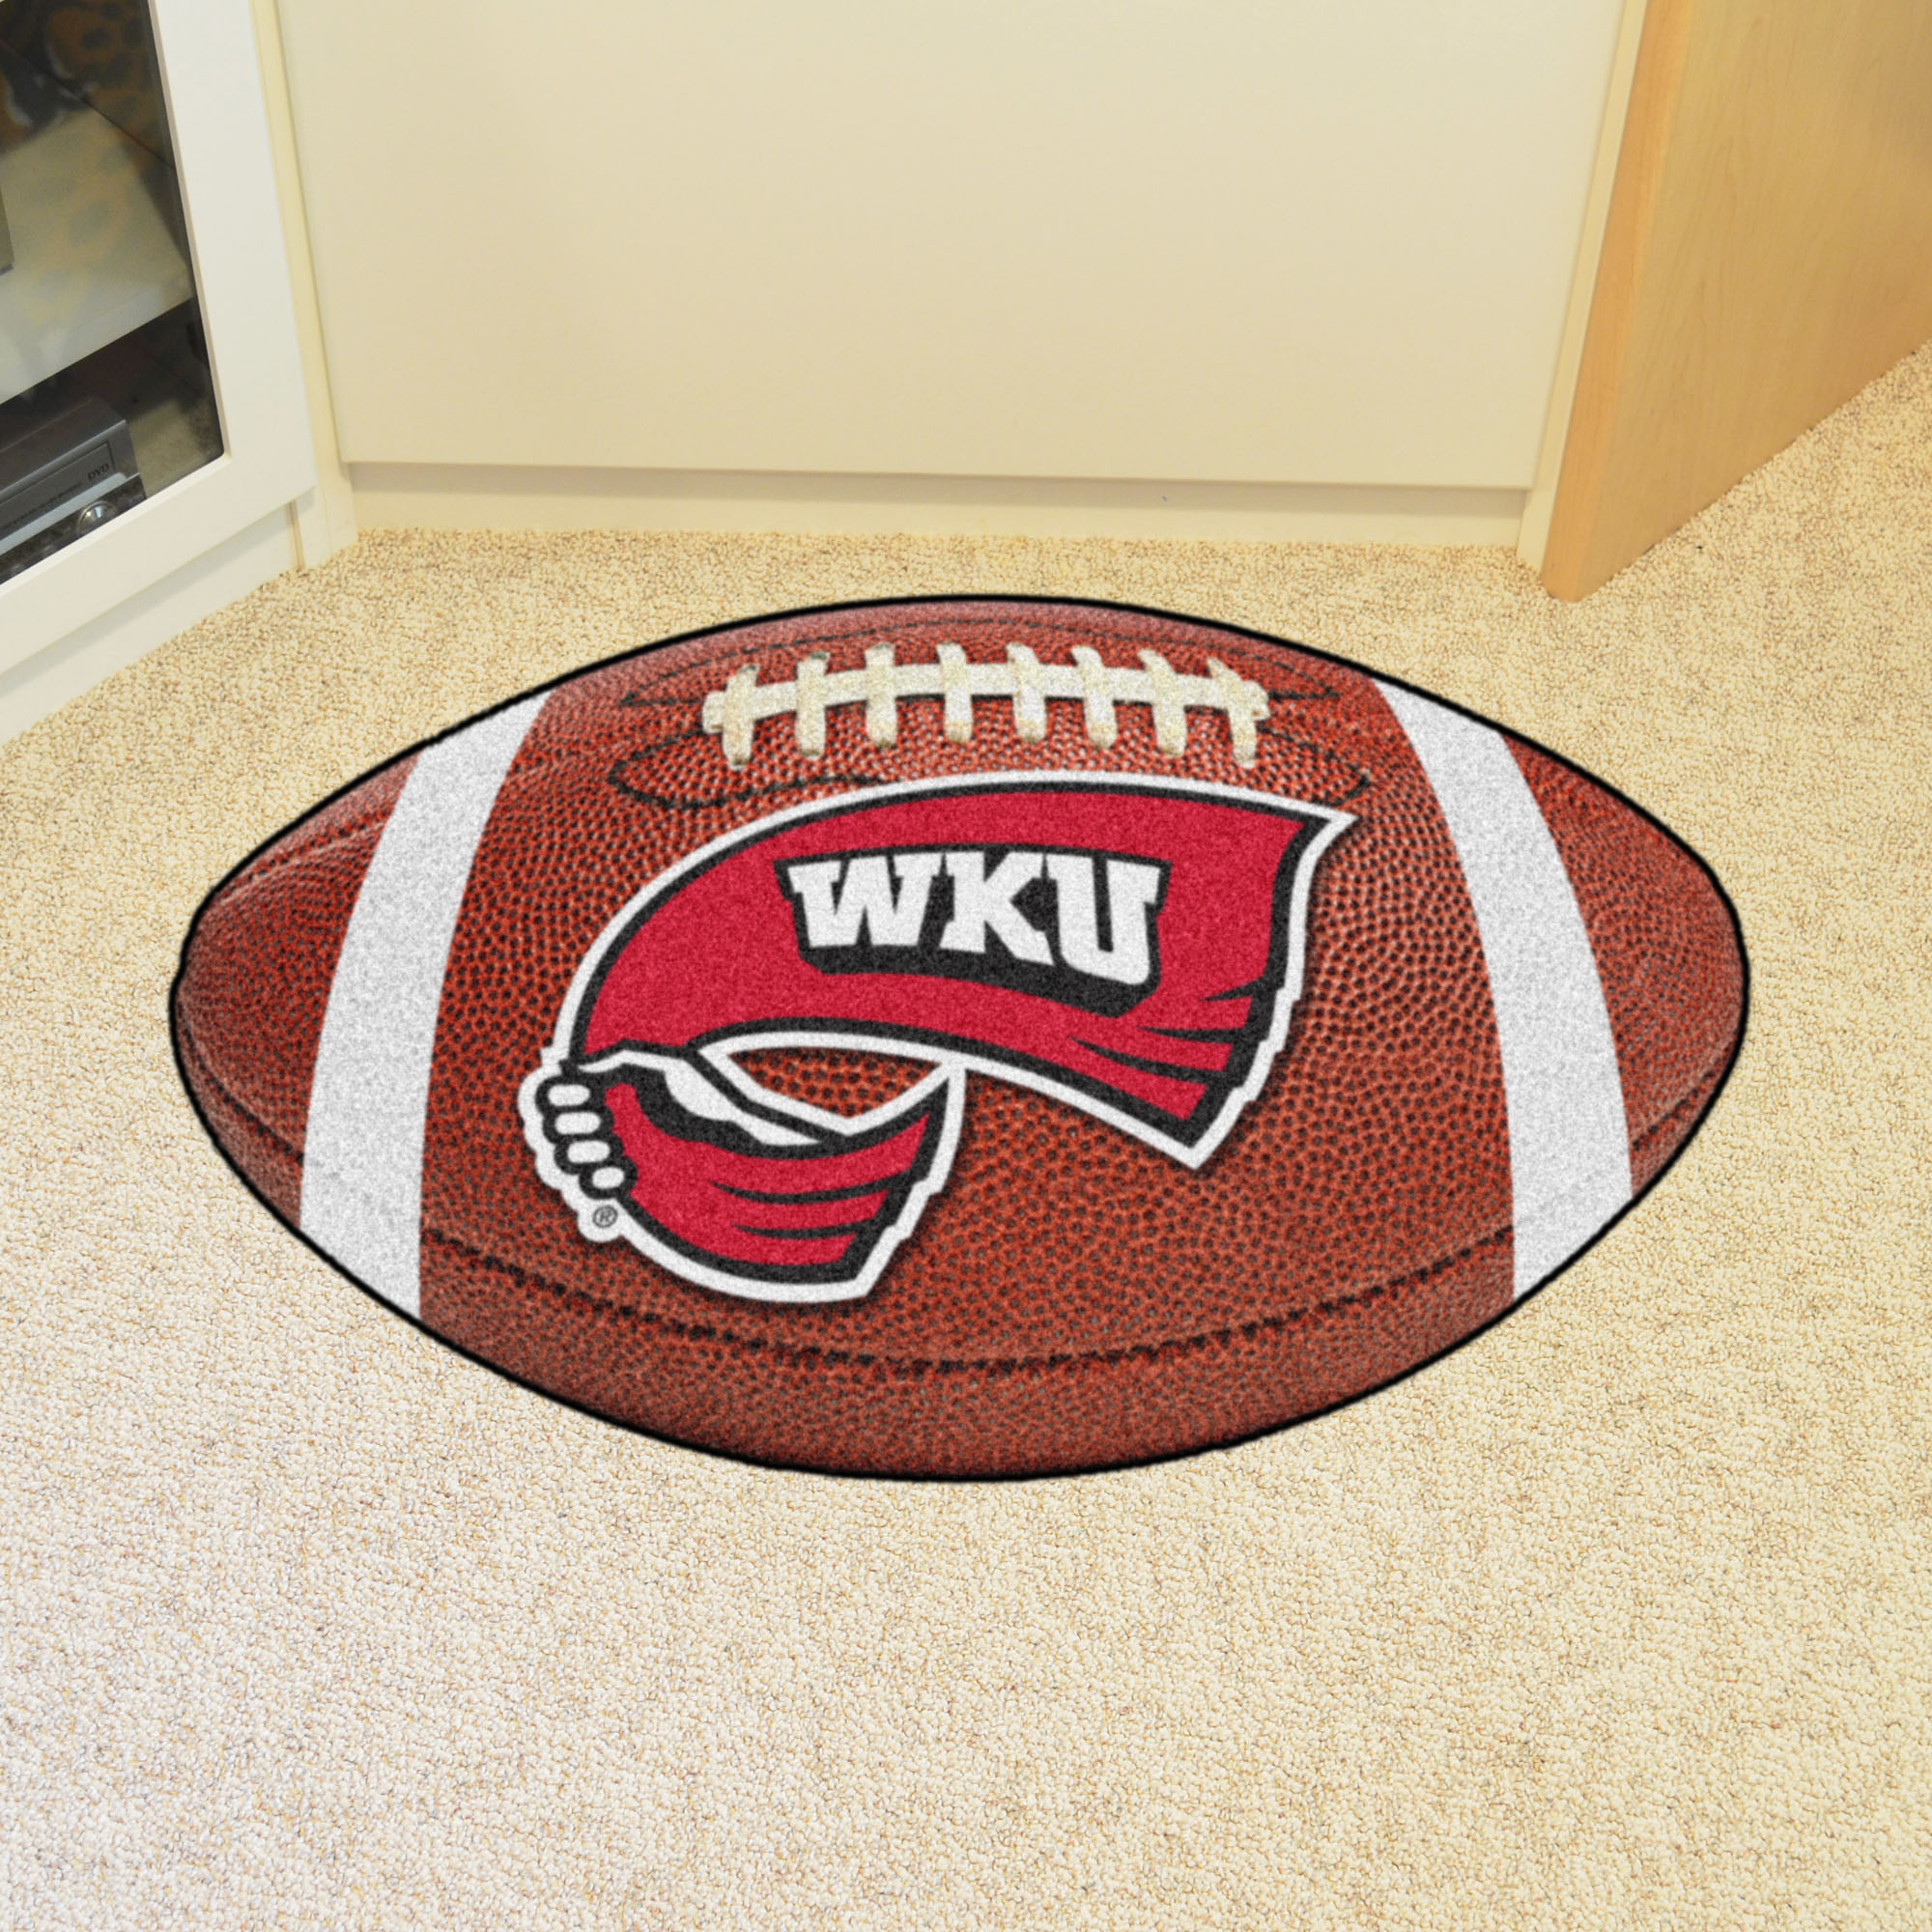 Western University Kentucky Ball Shaped Area rugs (Ball Shaped Area Rugs: Football)